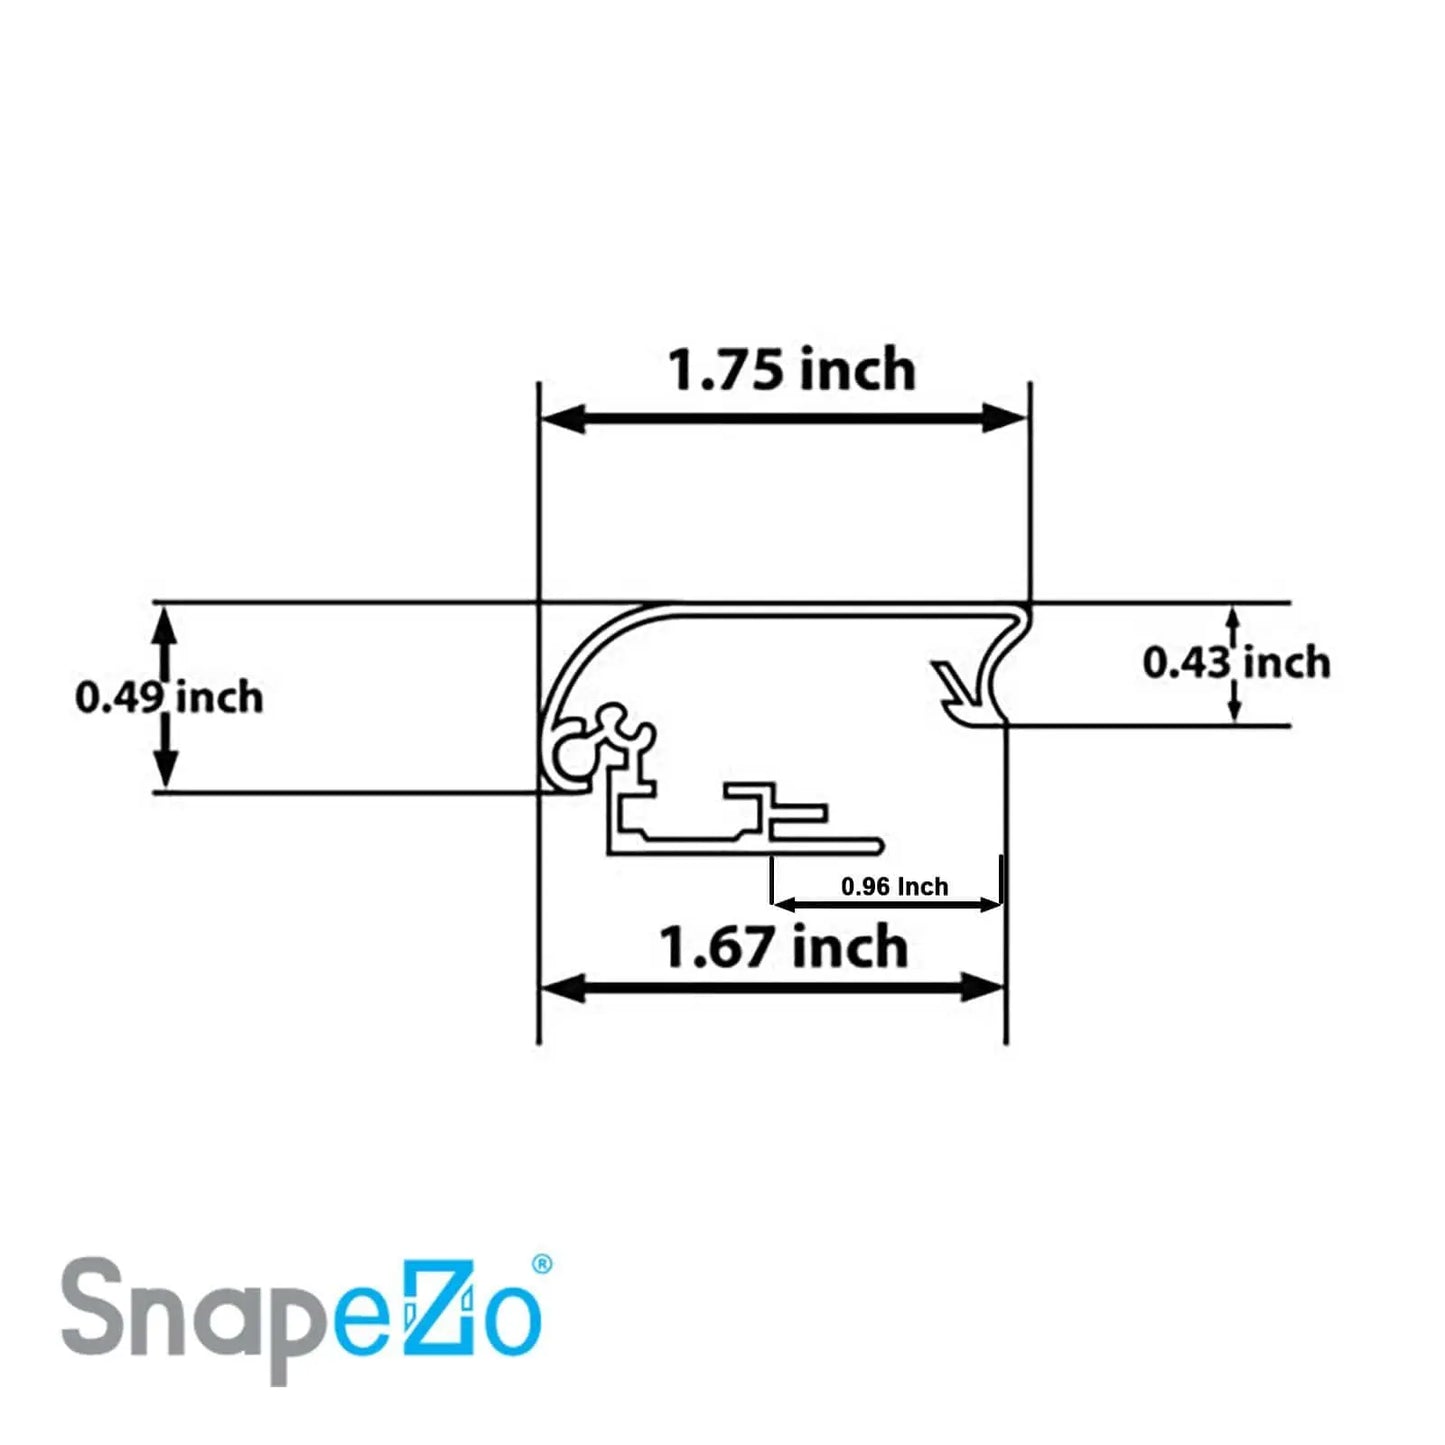 22x56 Black SnapeZo® Snap Frame - 1.7" Profile - Snap Frames Direct